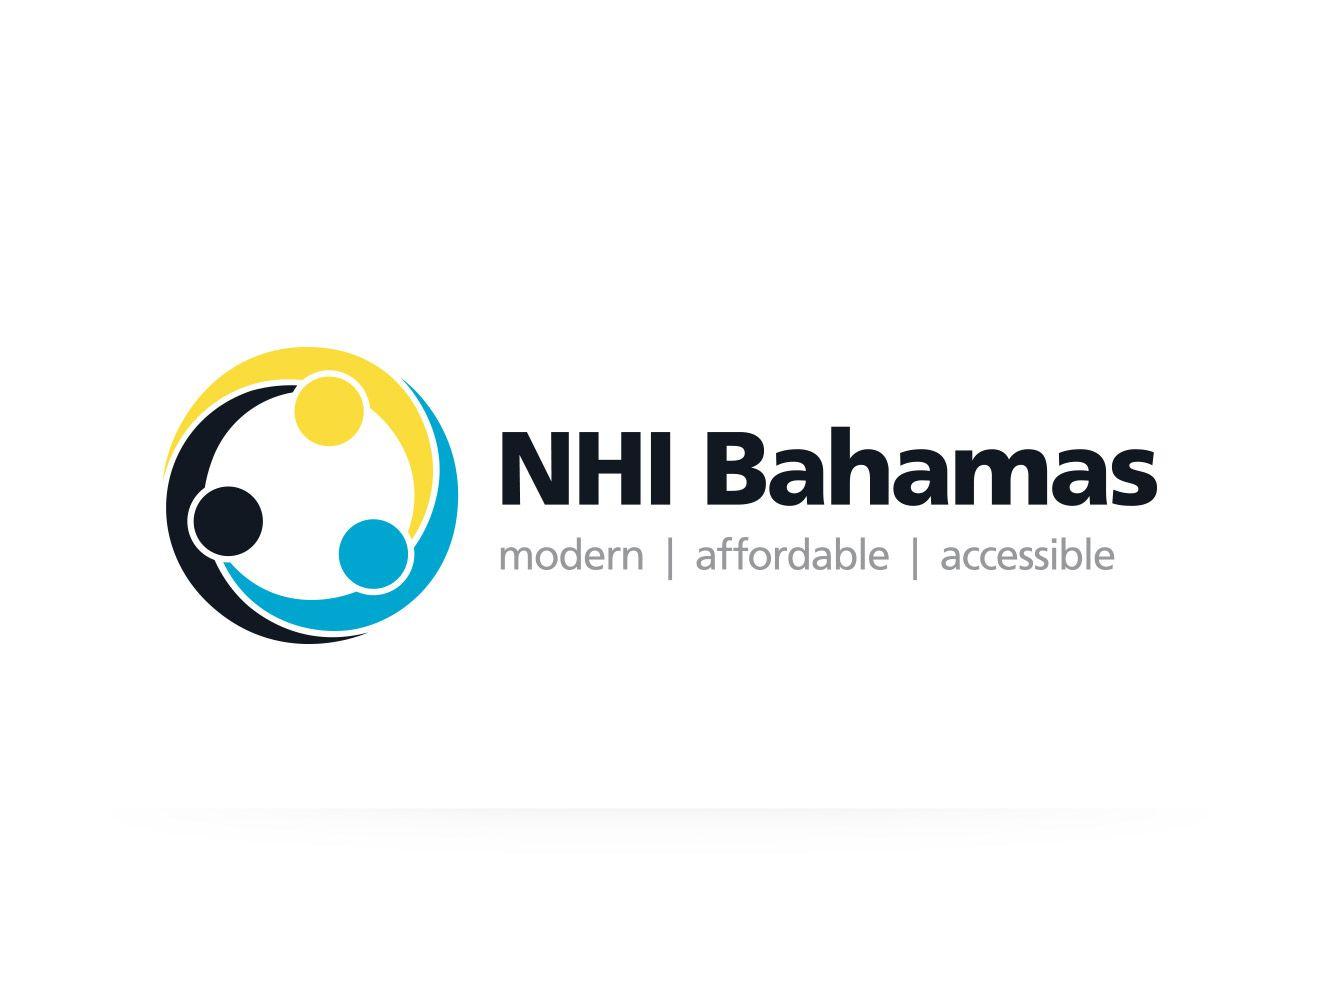 Nhi Logo - Xquisit - National Health Insurance Bahamas Branding